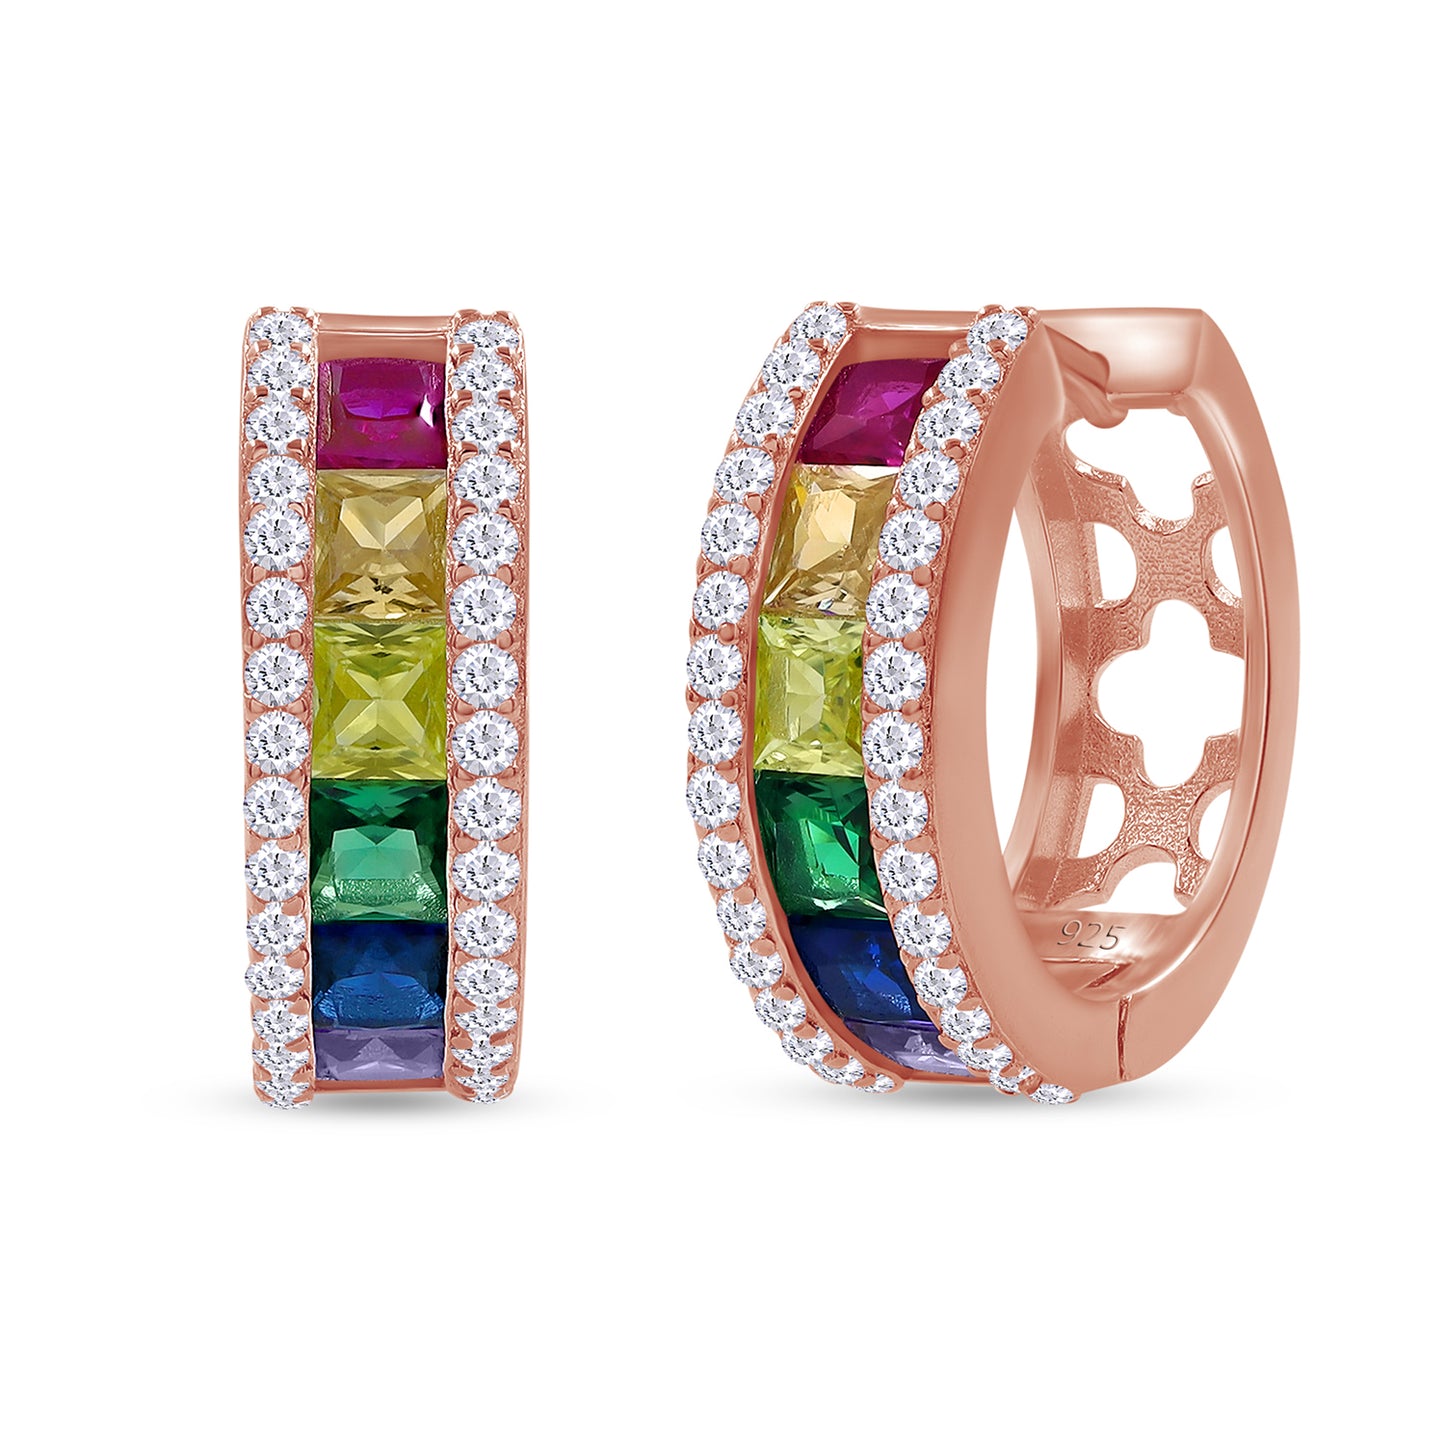 Rainbow Hoop Earrings for Women, 14K Gold Plated 925 Sterling Silver Multi-Color Cubic Zirconia Round Huggie Earrings, Hypoallergenic Earrings Jewelry Gifts